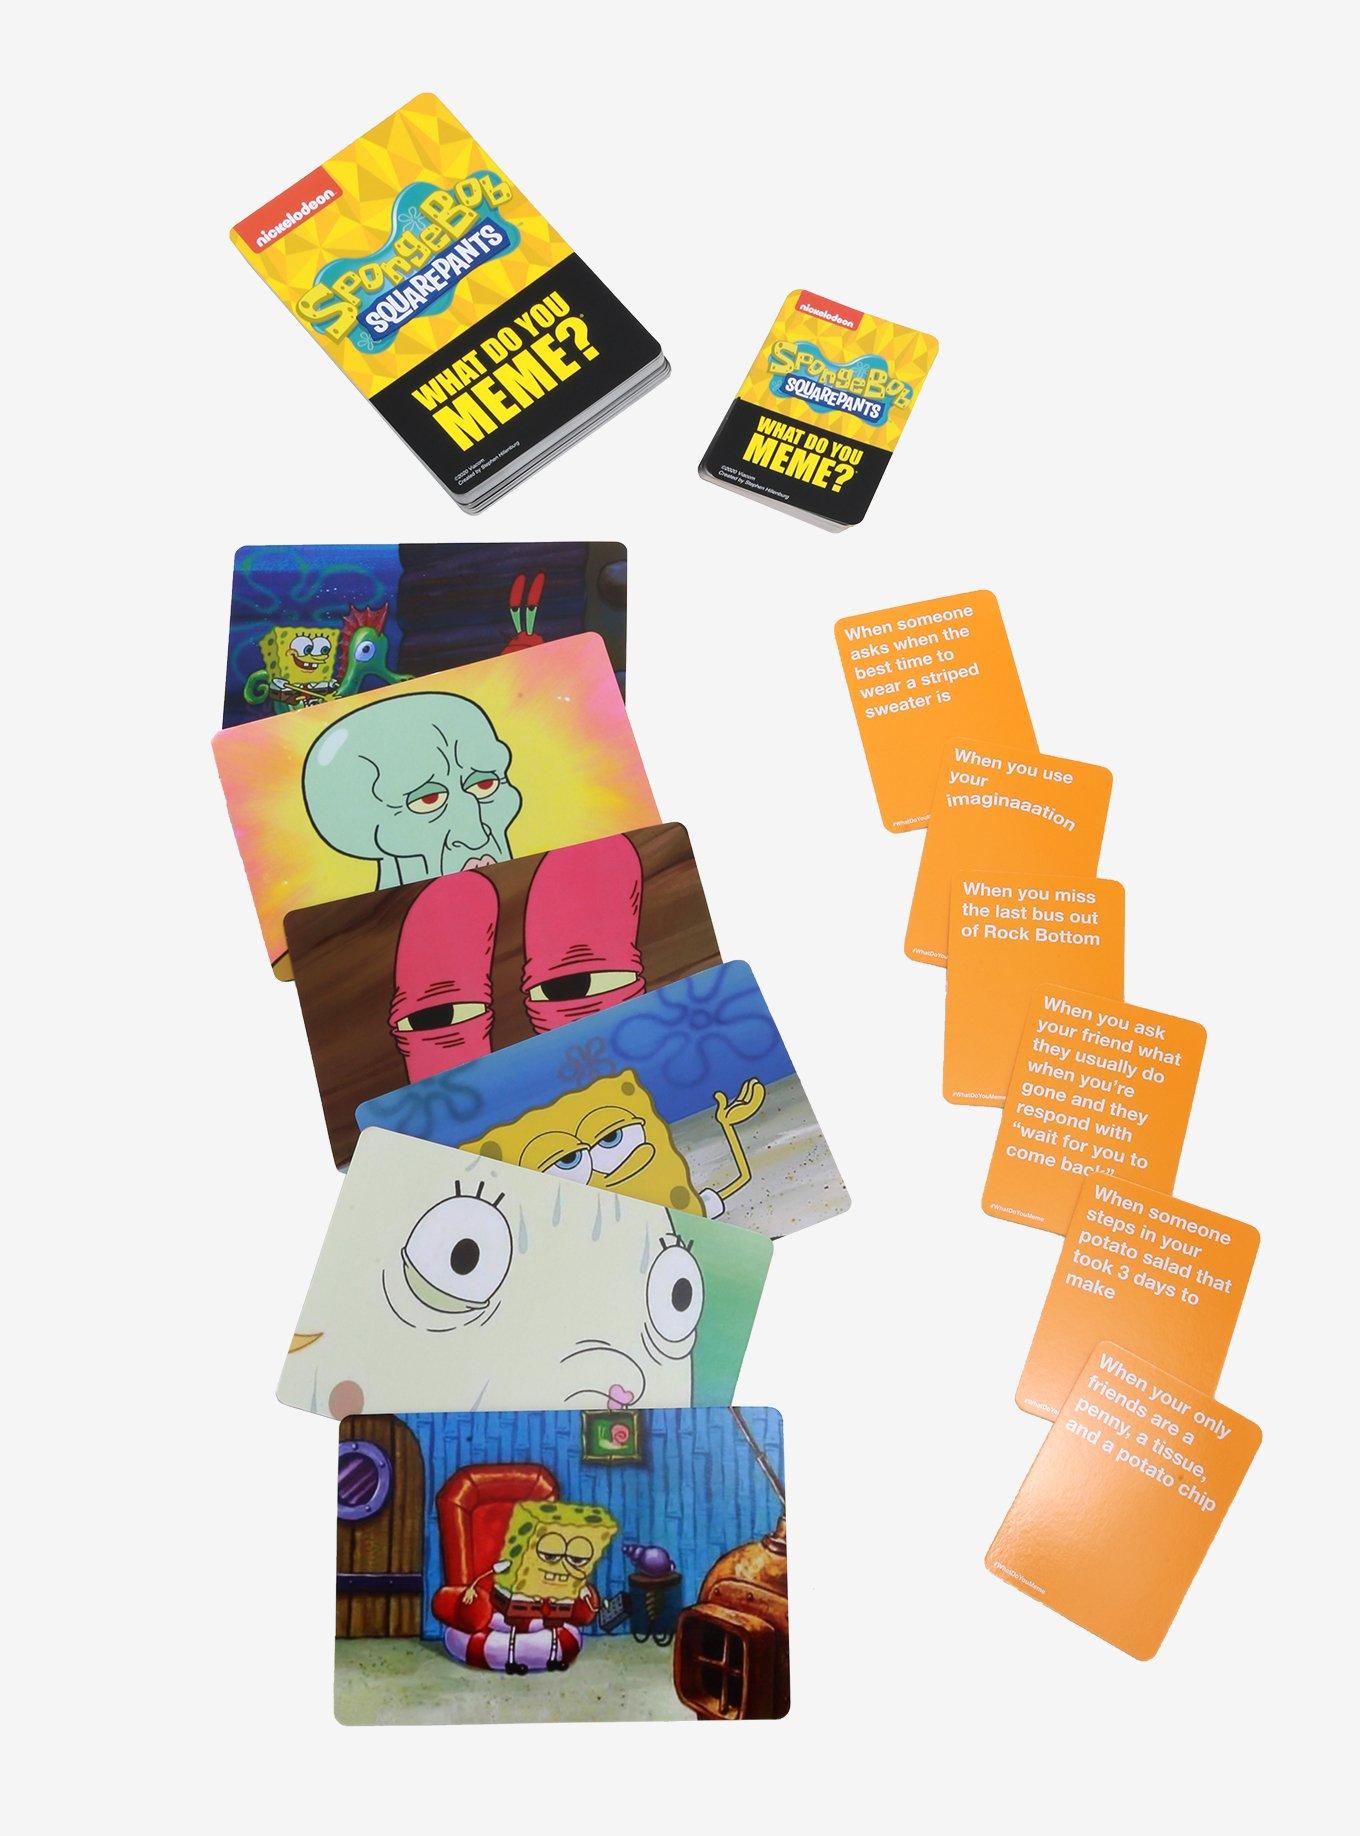 Nickelodeon What Do You Meme? Family- SpongeBob SquarePants Edition 